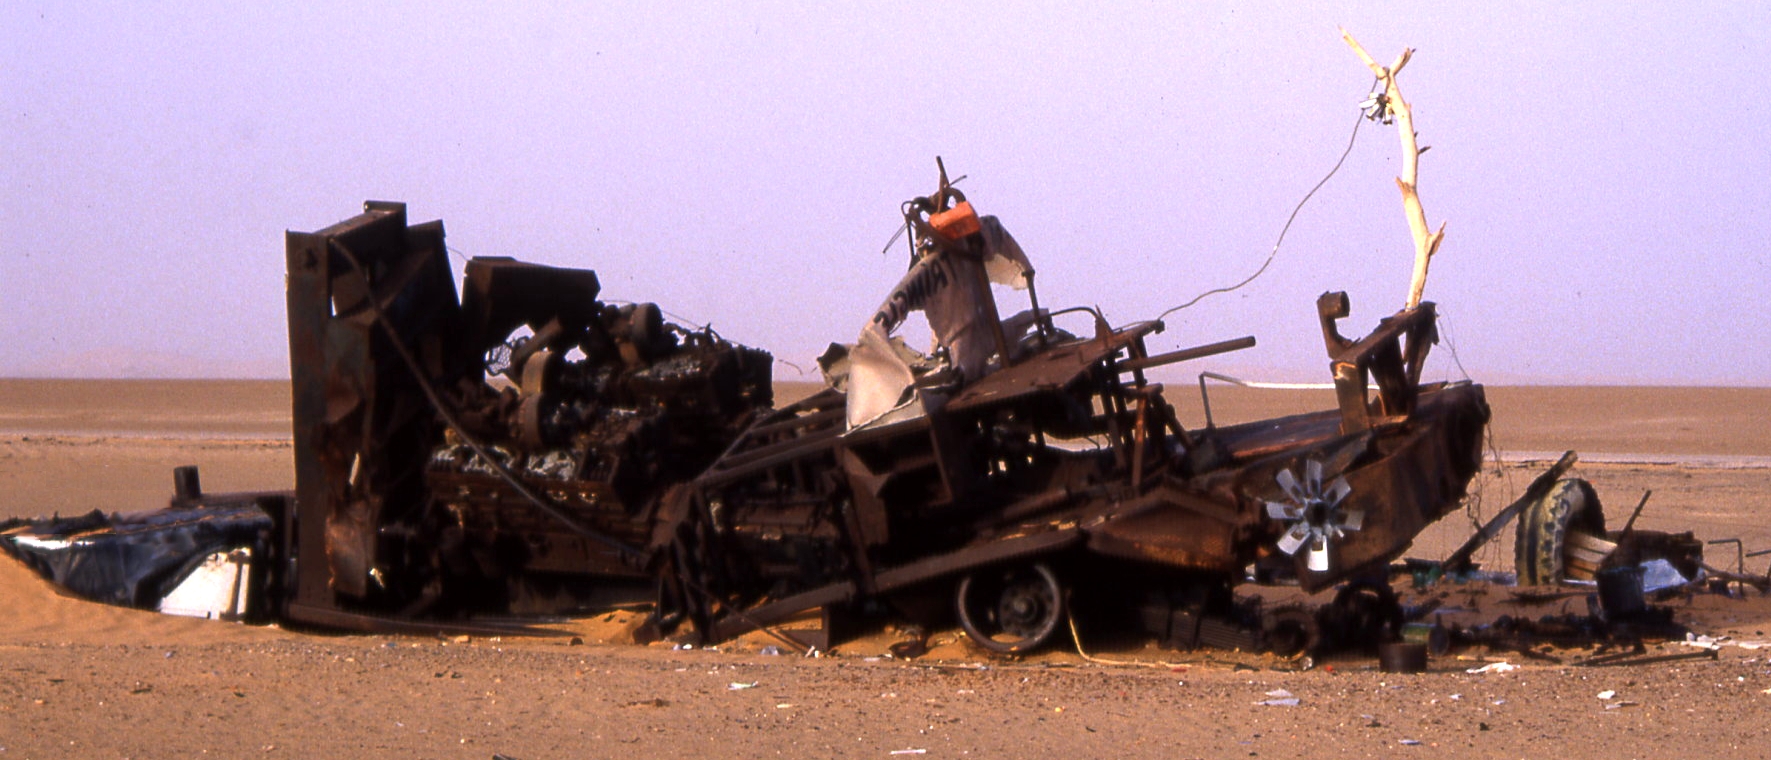 AlgeriaSahara-CarWrecks-PiecesCombinedToQuasiArt--a45r.jpg